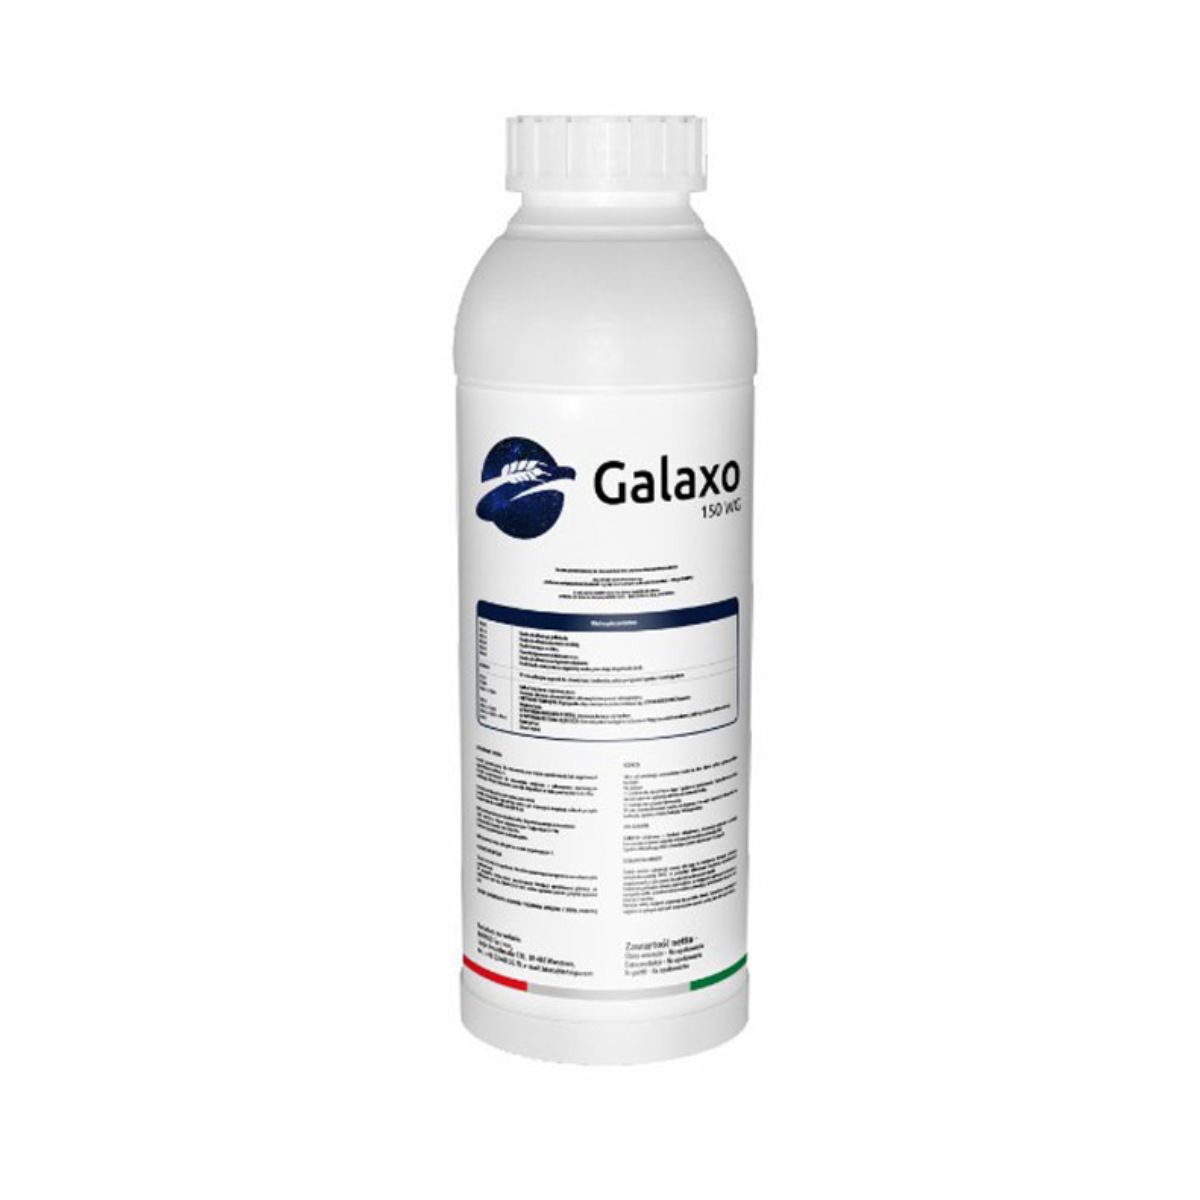 Erbicide - Erbicid cereale GALAXO 150 WG + ADJUVANT, 1 kilogram, hectarul.ro